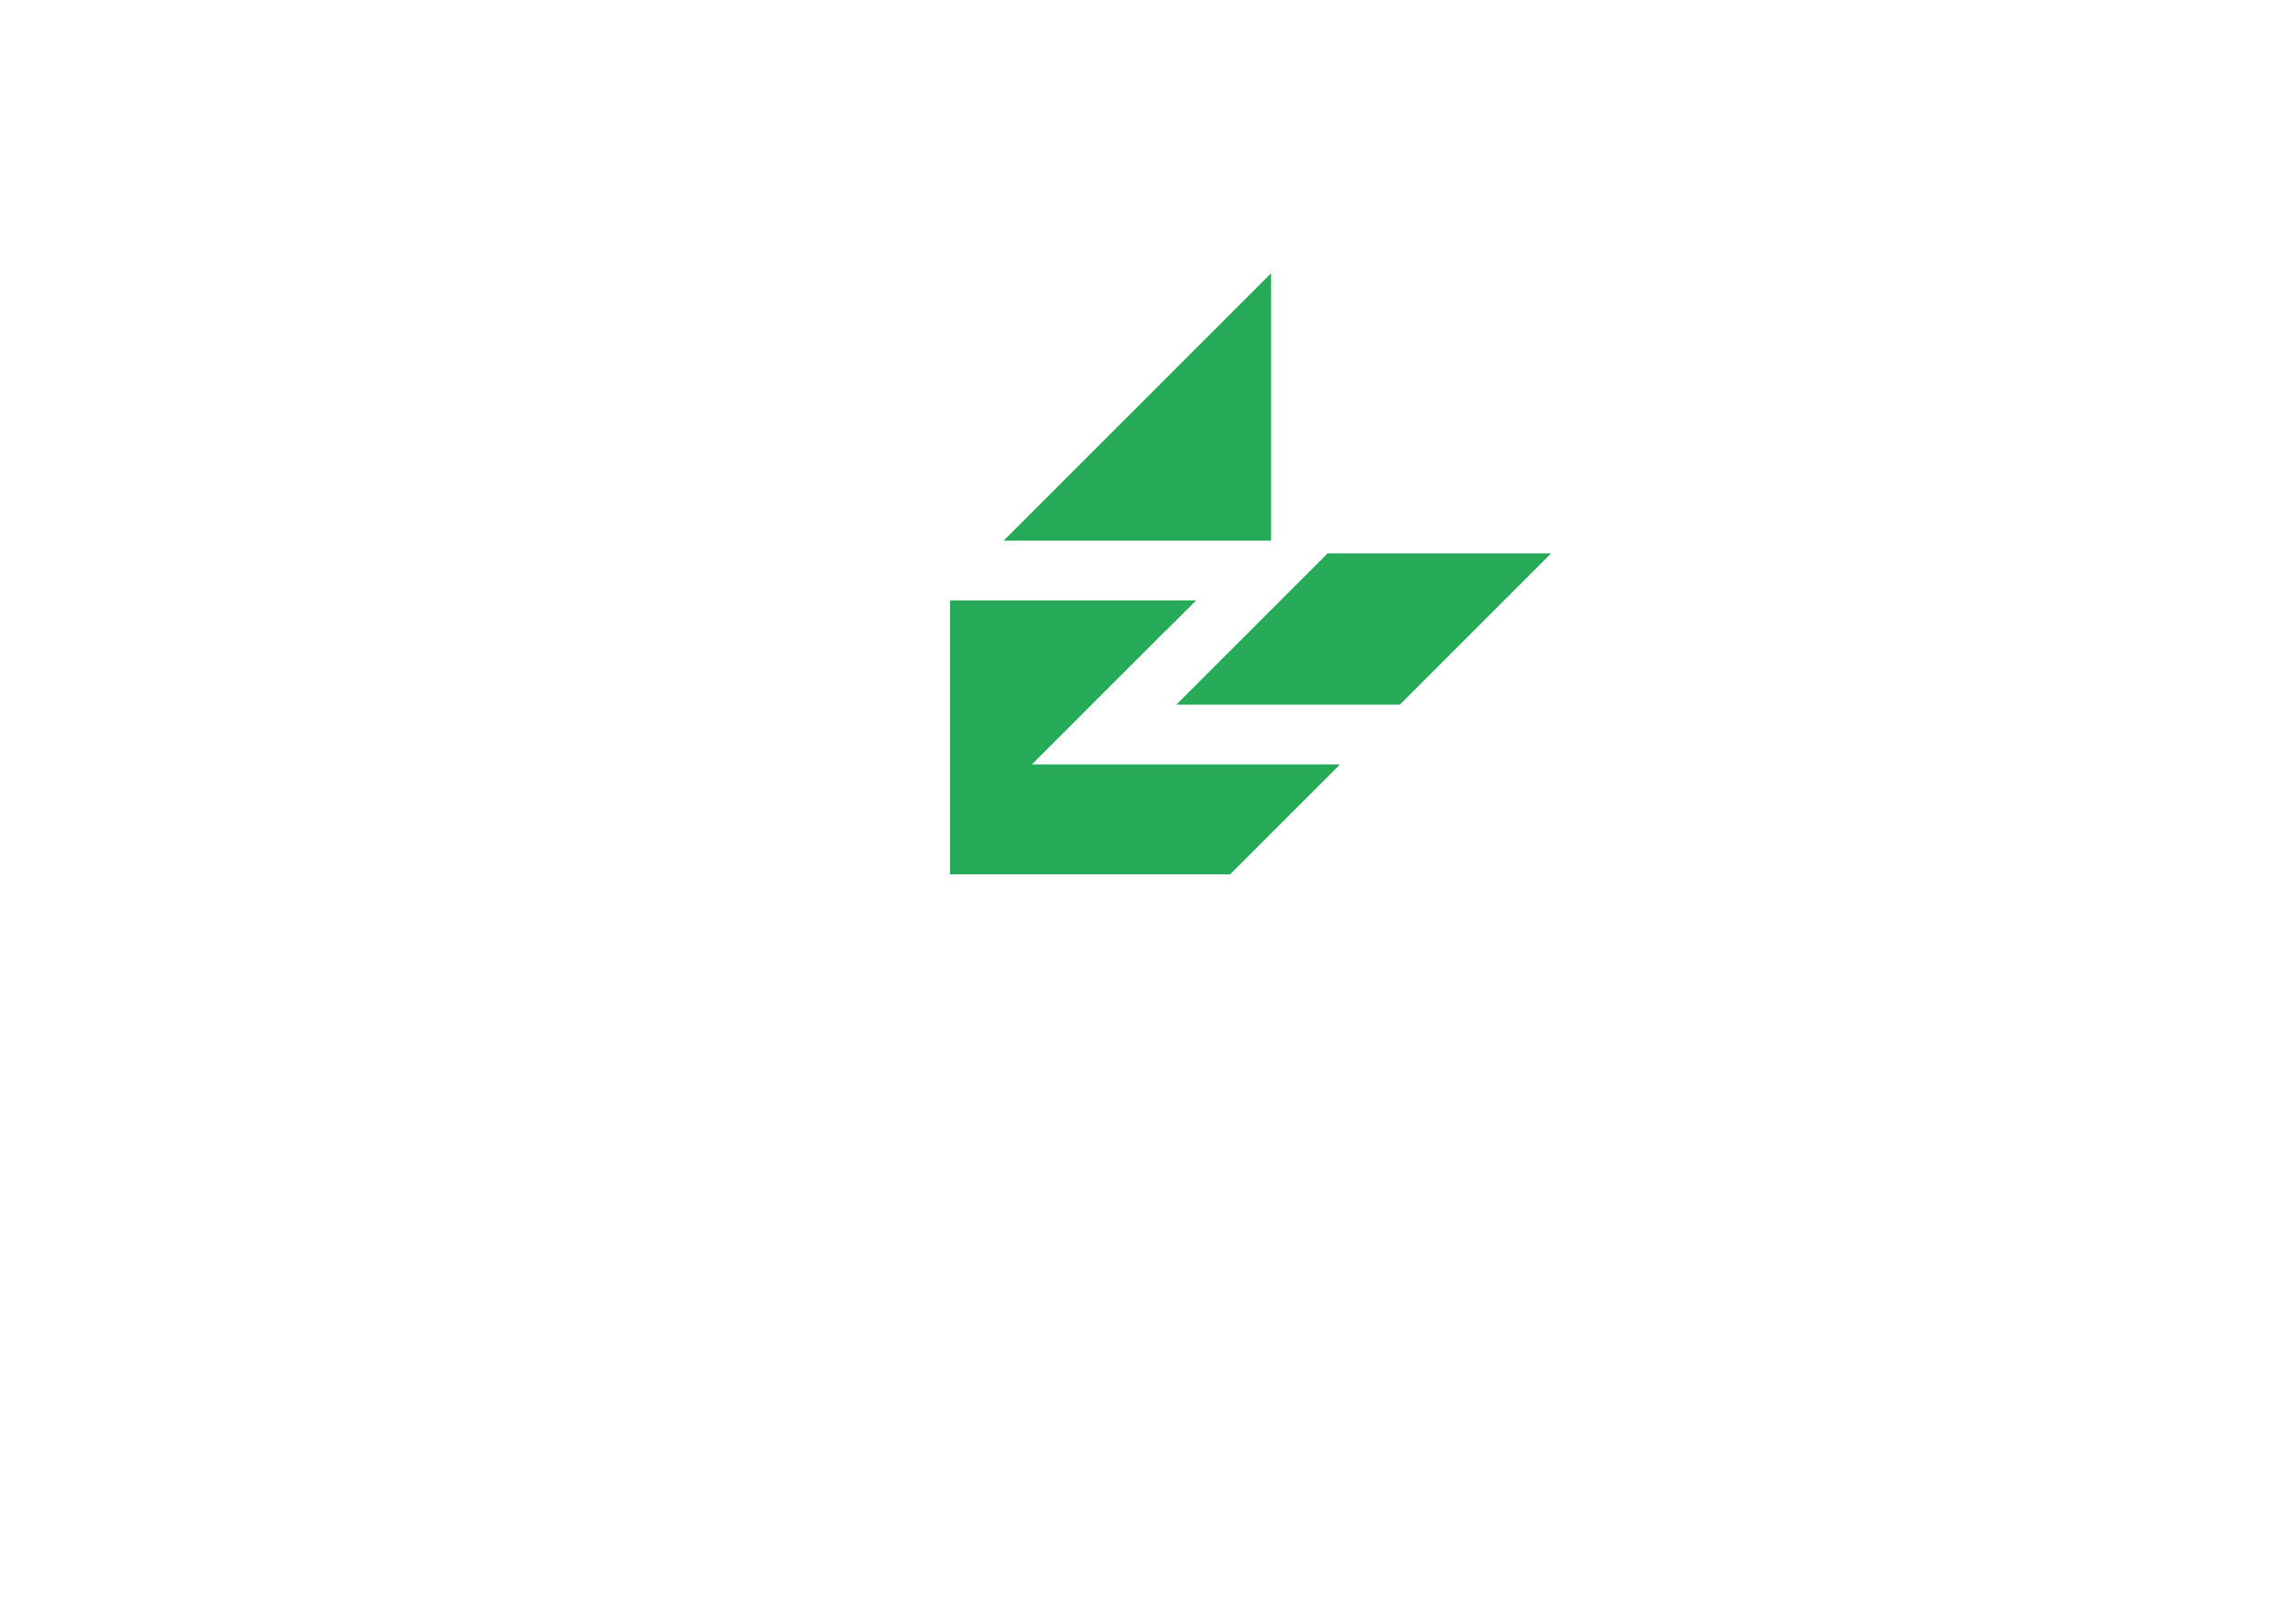 Zagrow - Coming Soon